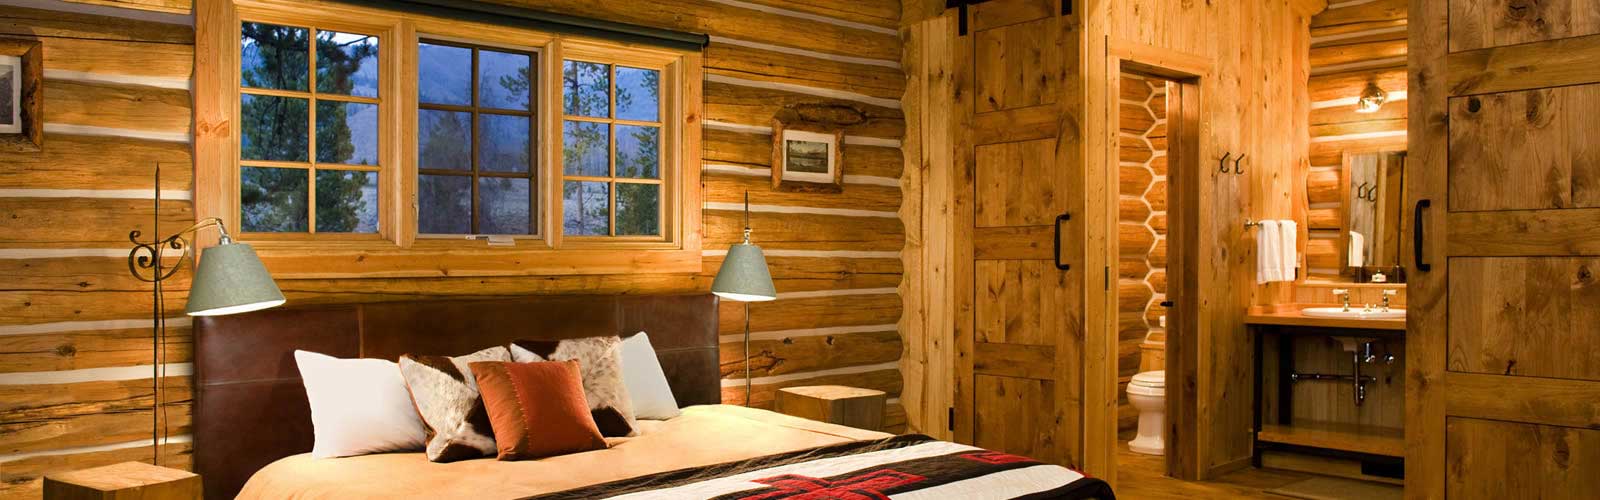 A cabin bedroom in Stanley, Idaho | Stanley CC